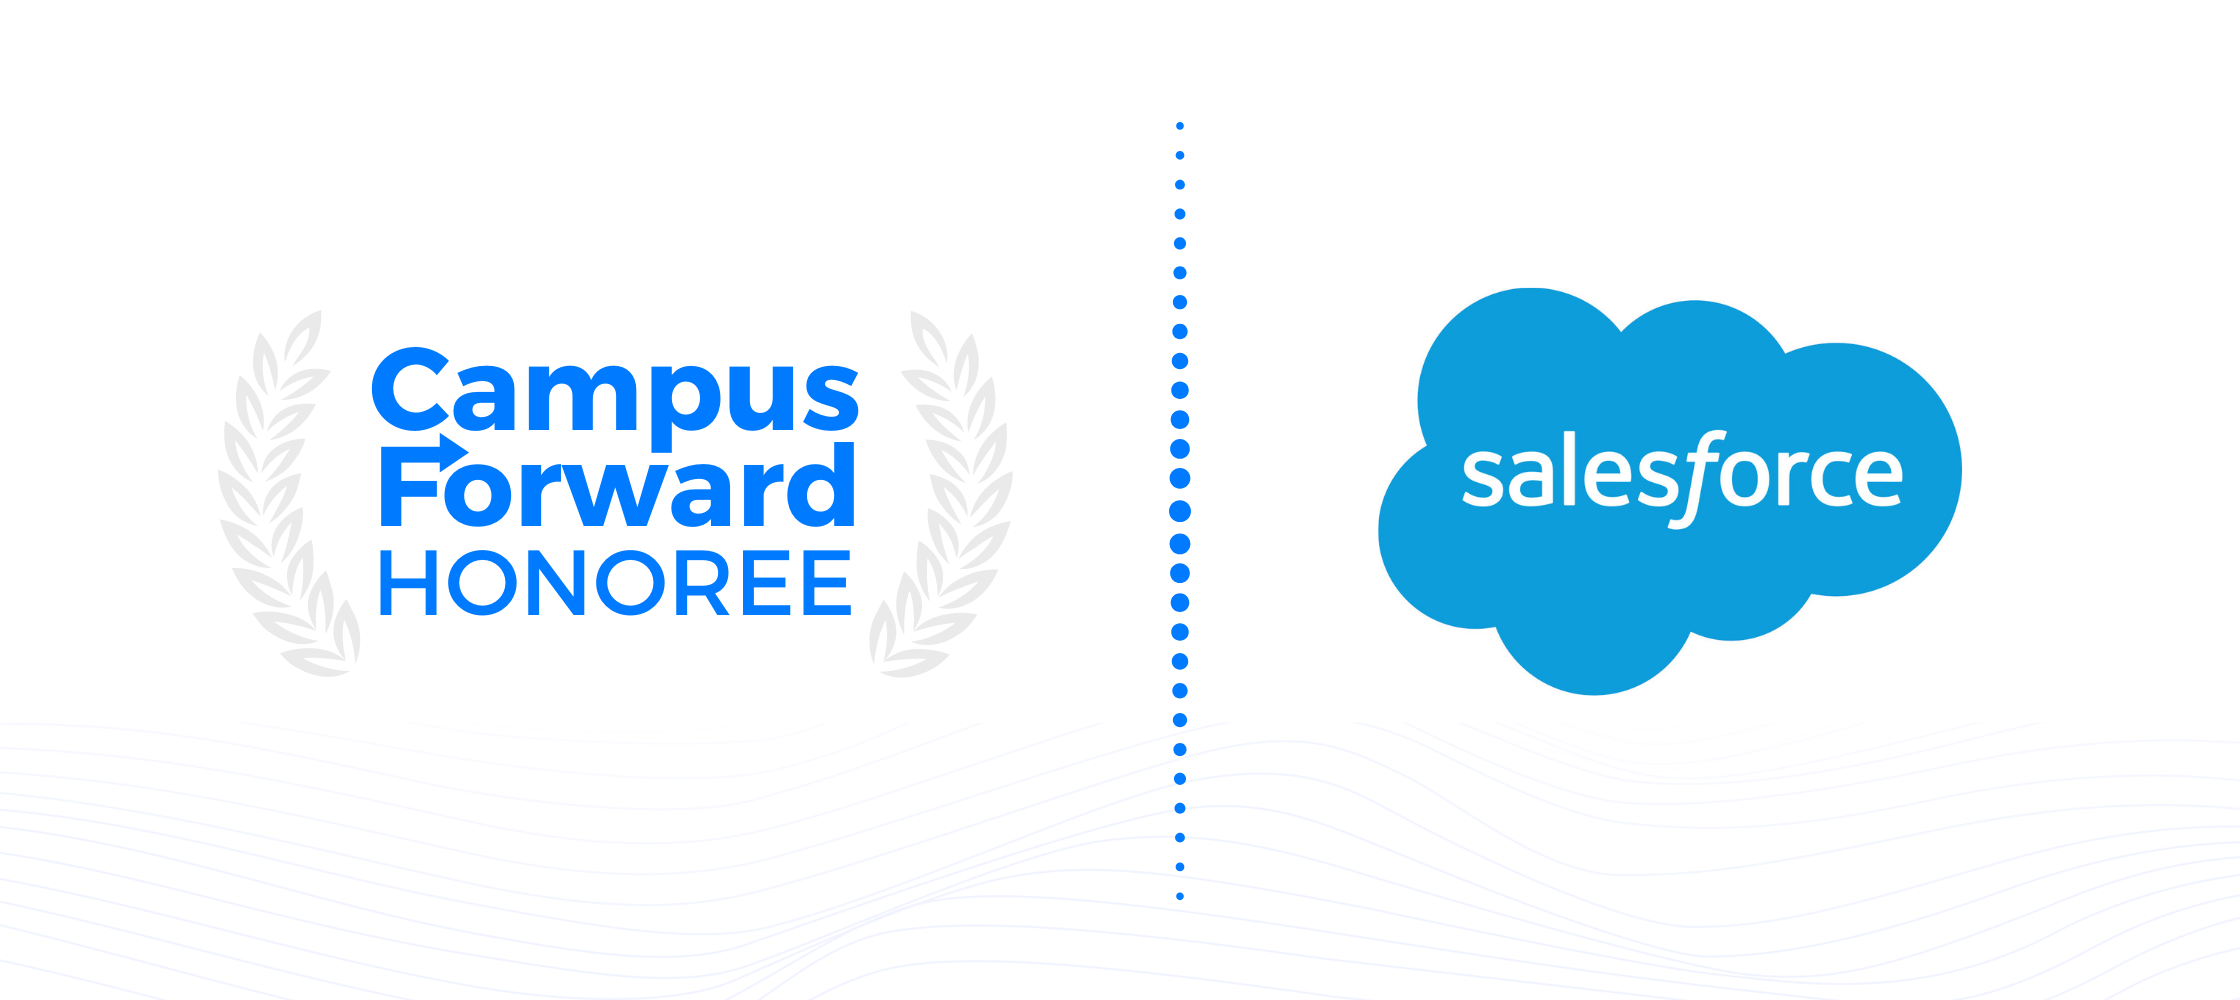 Campus Forward Honoree - Salesforce